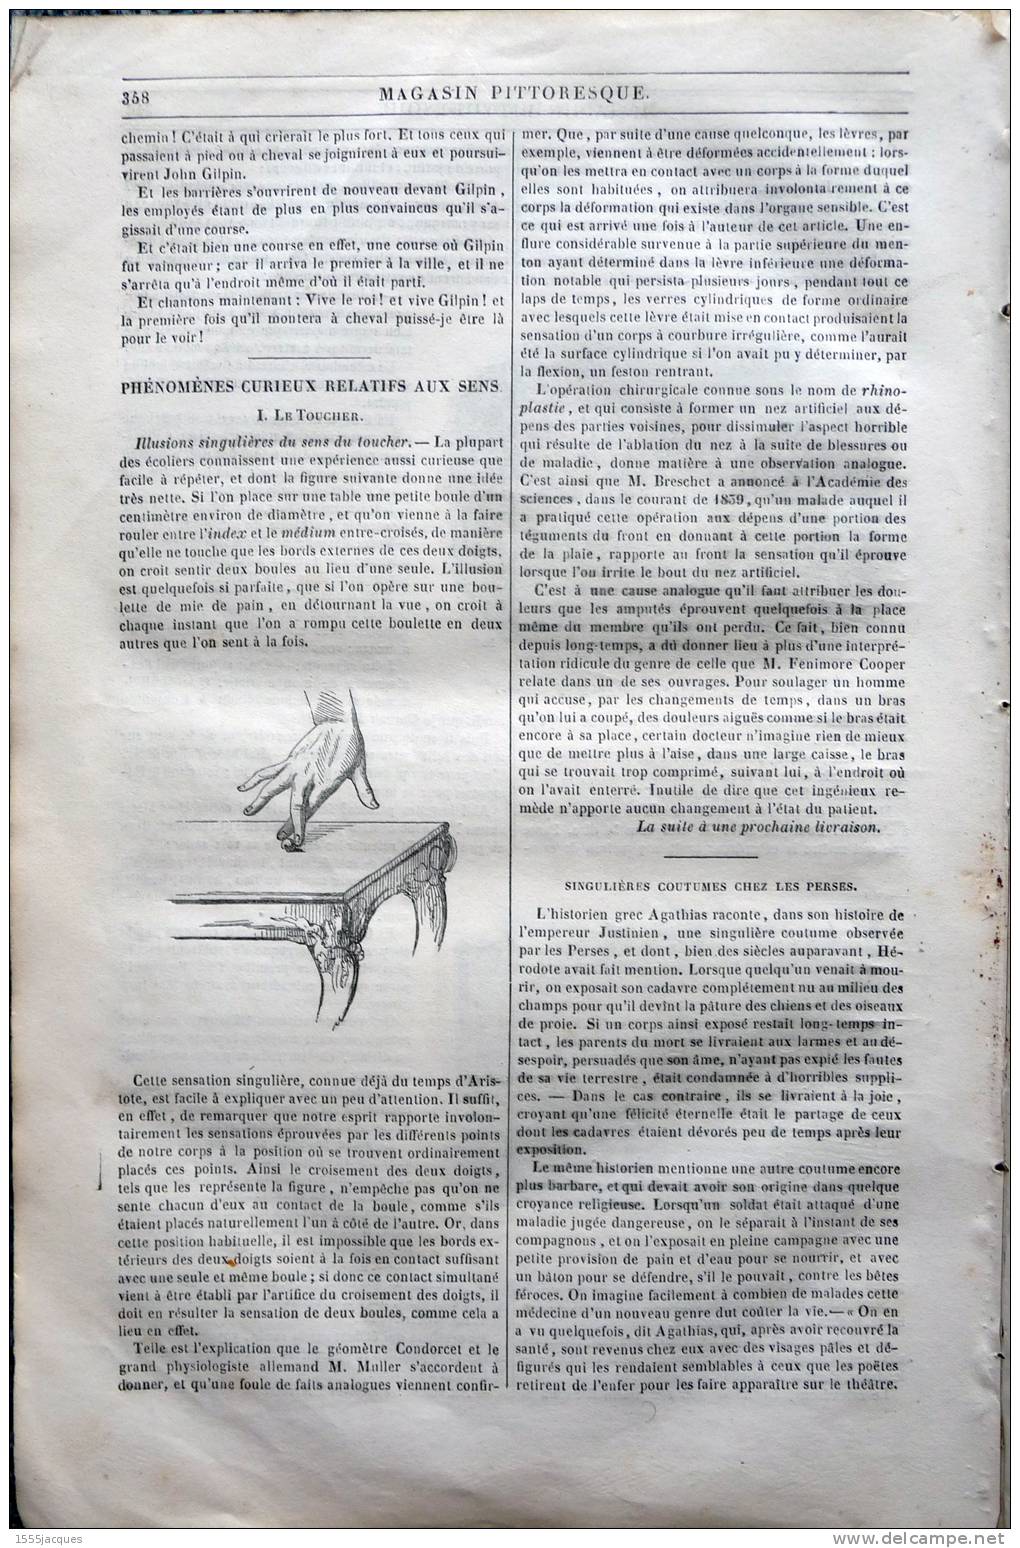 LE MAGASIN PITTORESQUE - NOV. 1842 - N°45 JOHN GILPIN - GERARD DOW -SENS DU TOUCHER - COSTUME GAULOIS - - 1800 - 1849